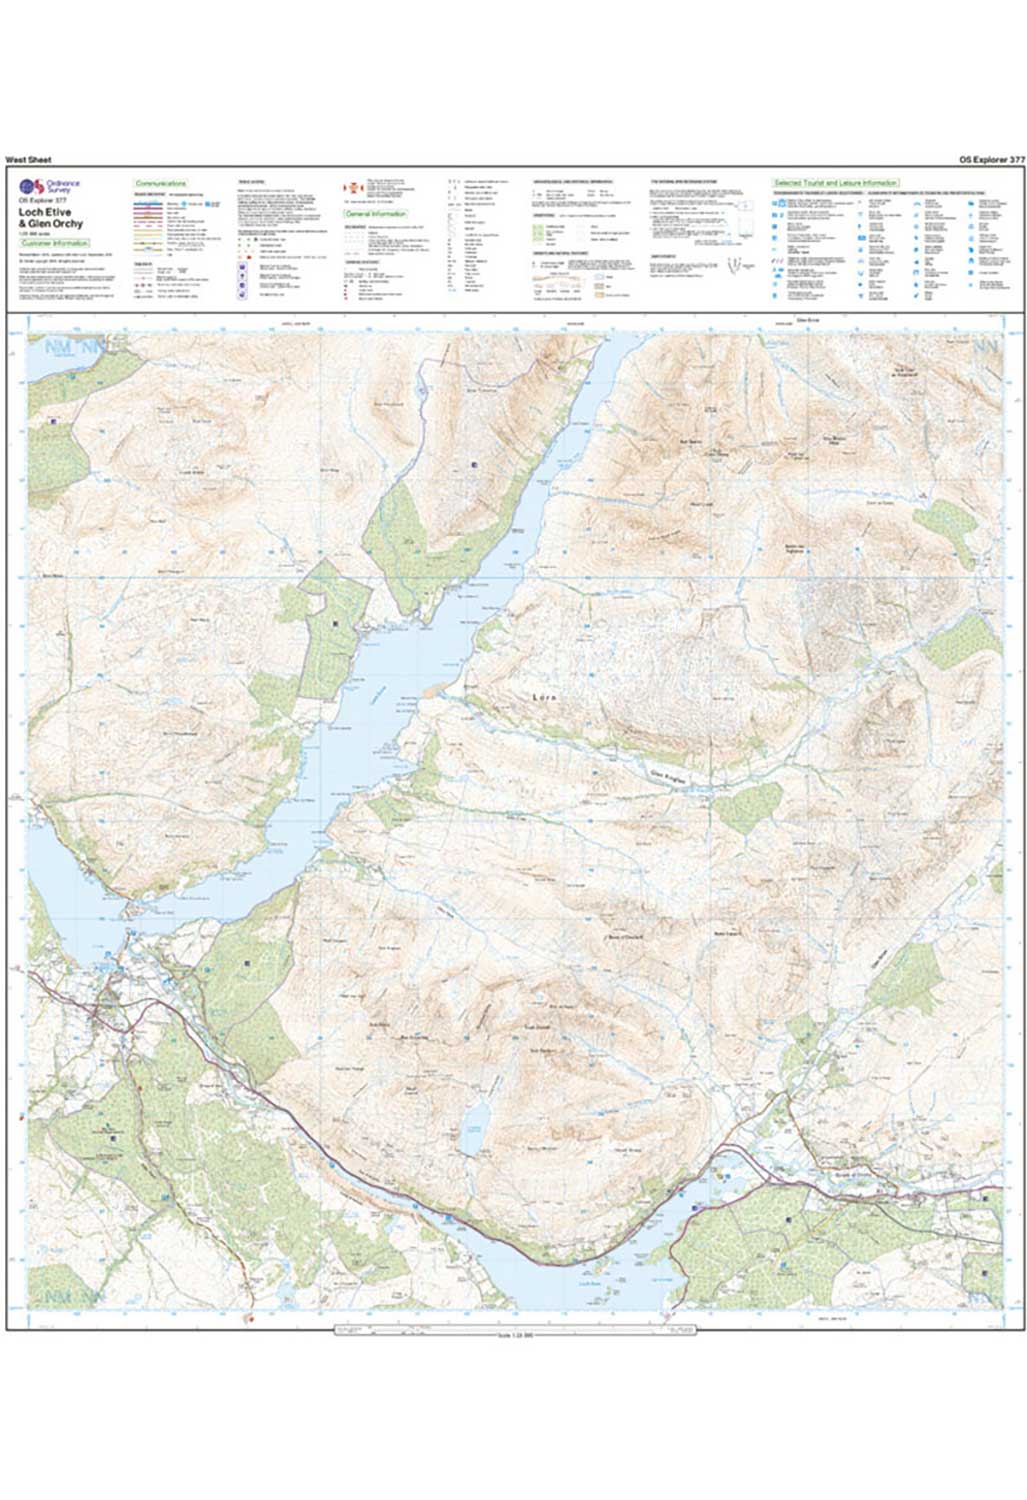 Ordnance Survey Loch Etive & Glen Orchy - OS Explorer 377 Map